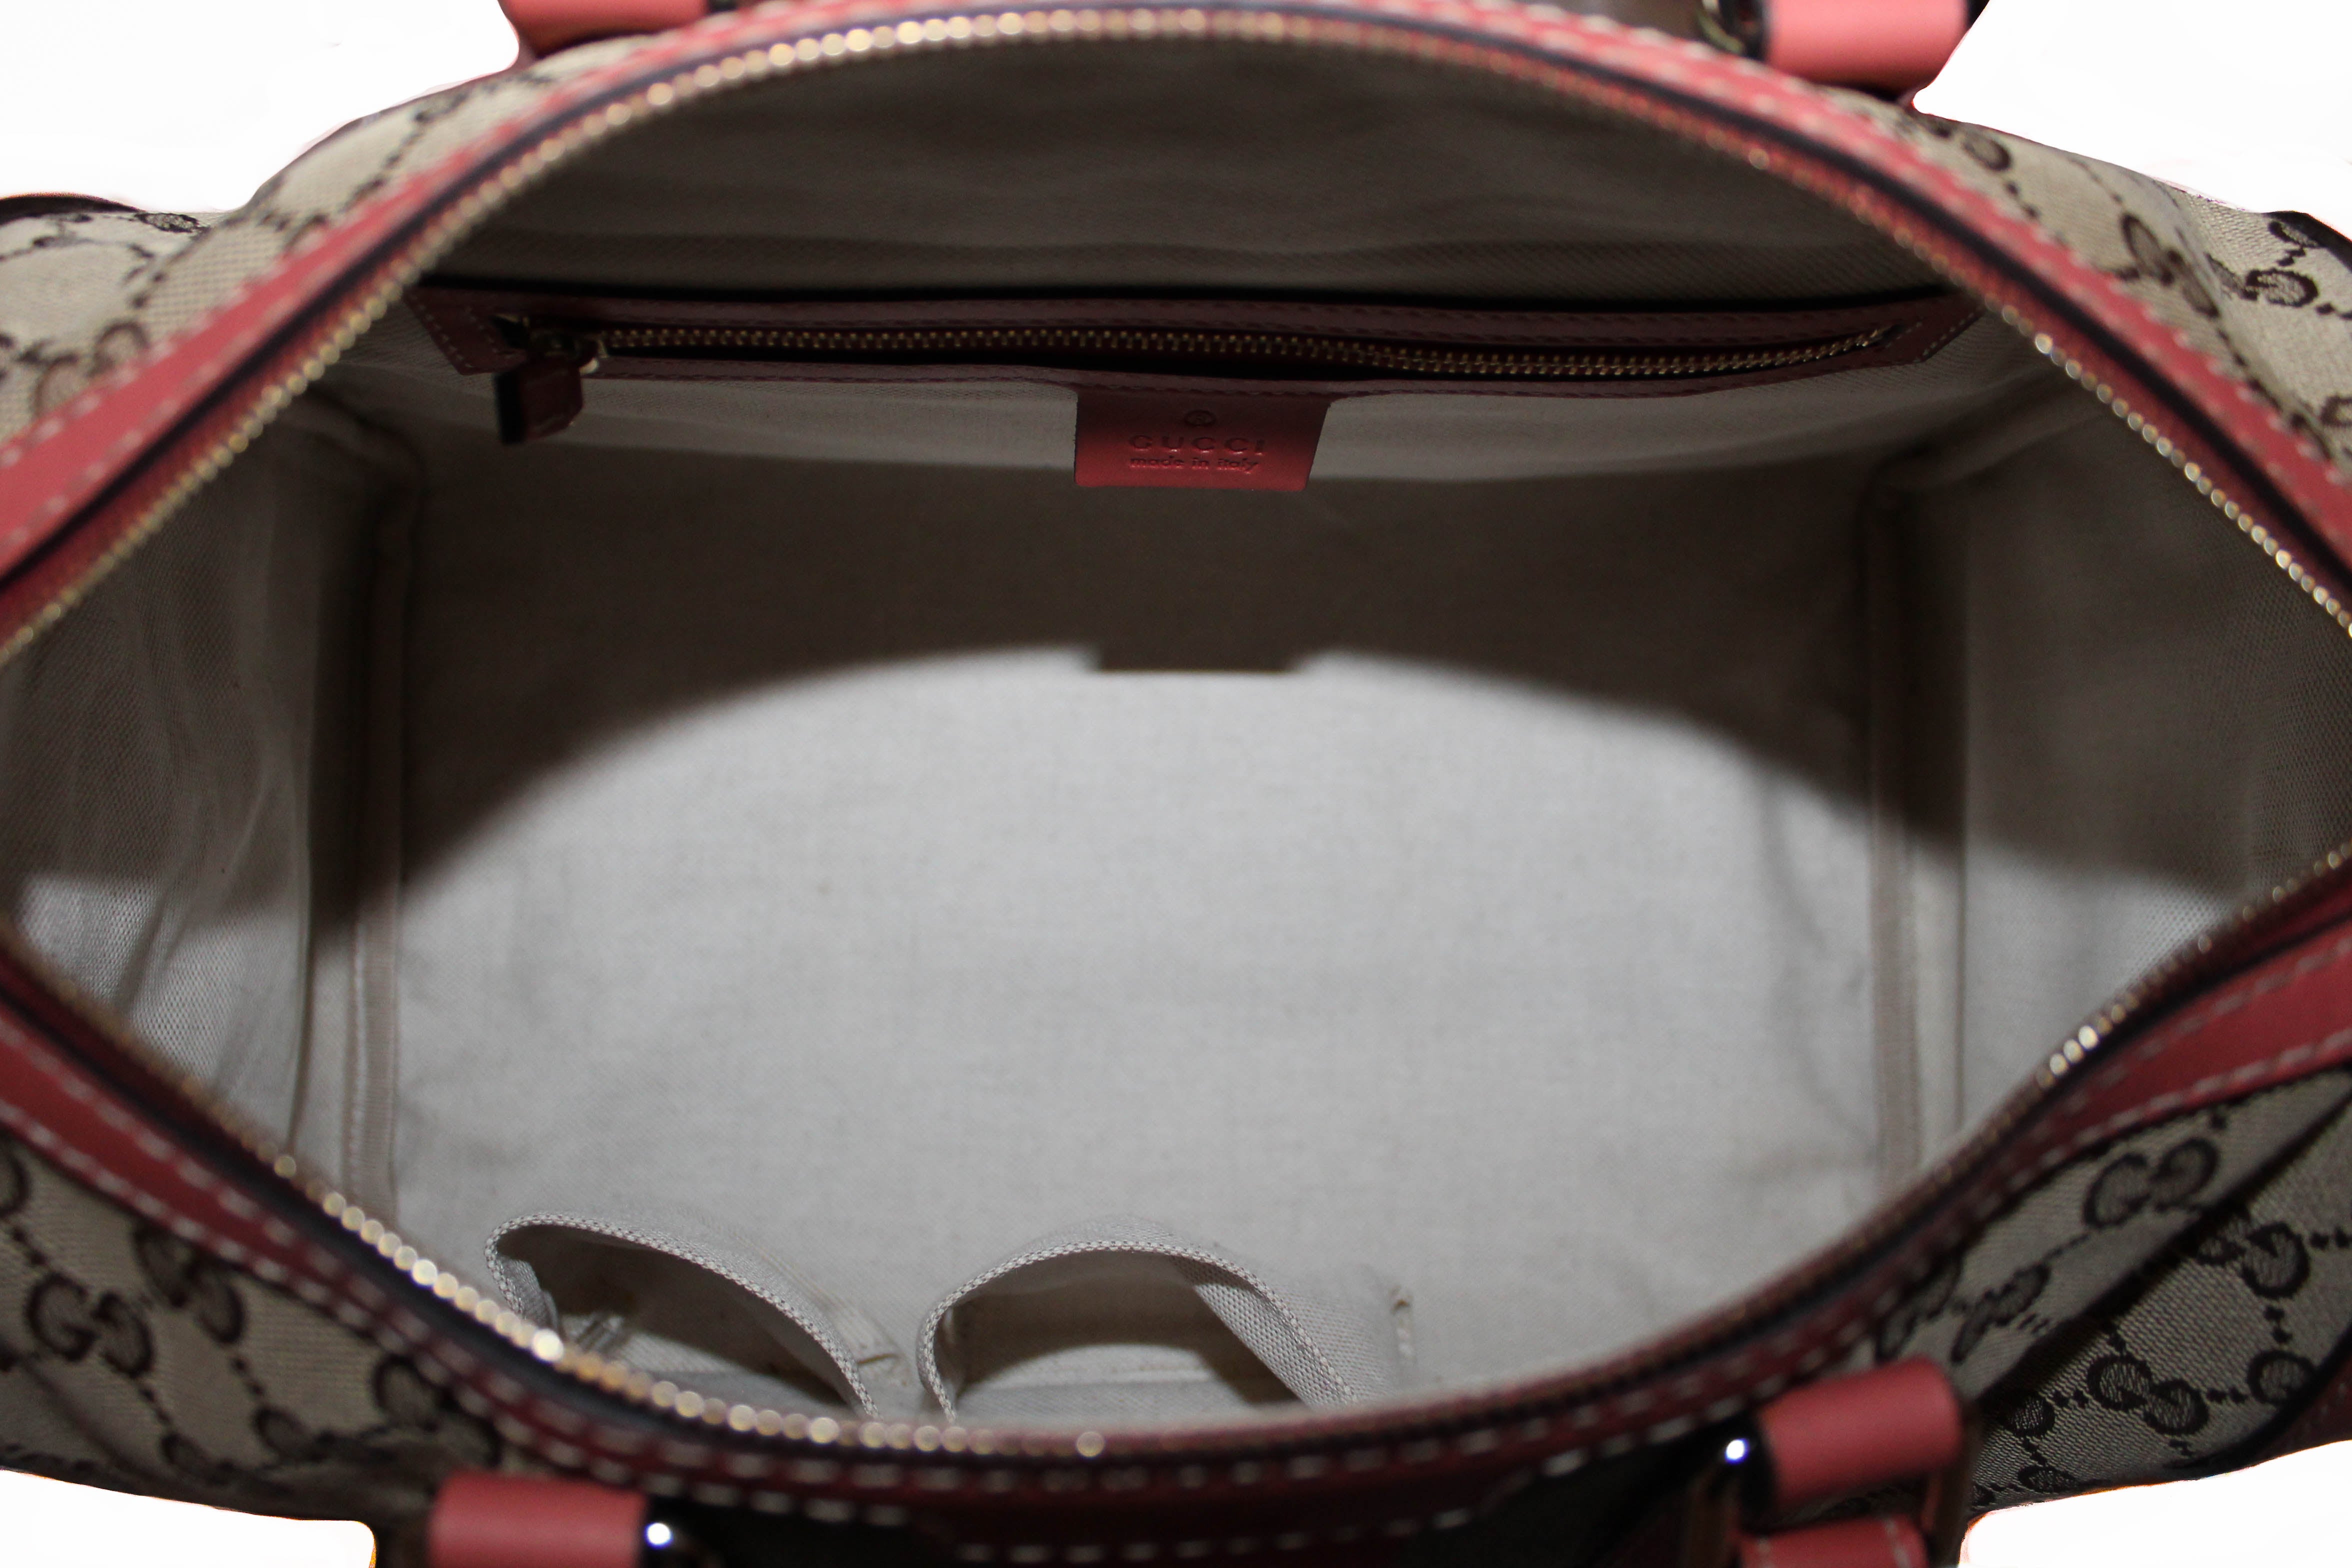 Authentic Gucci Pink Original Web Boston Handbag Bag 247205